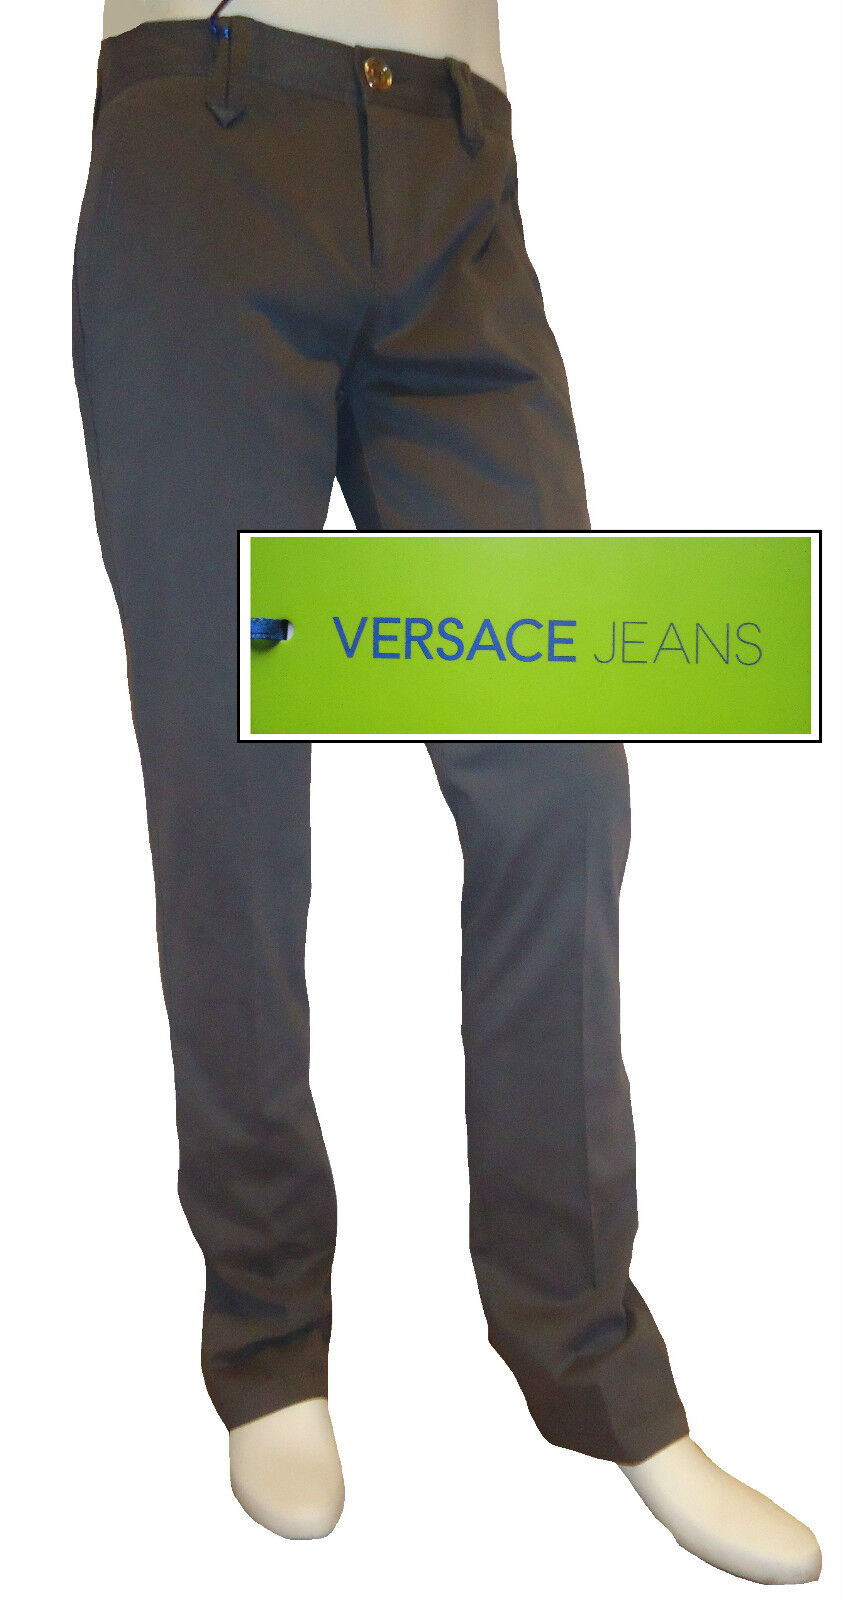 NWT $275.00 VERSACE JEANS by VERSACE Cotton Elastane Slim Fit Chino Pants Sprzedaż krajowa